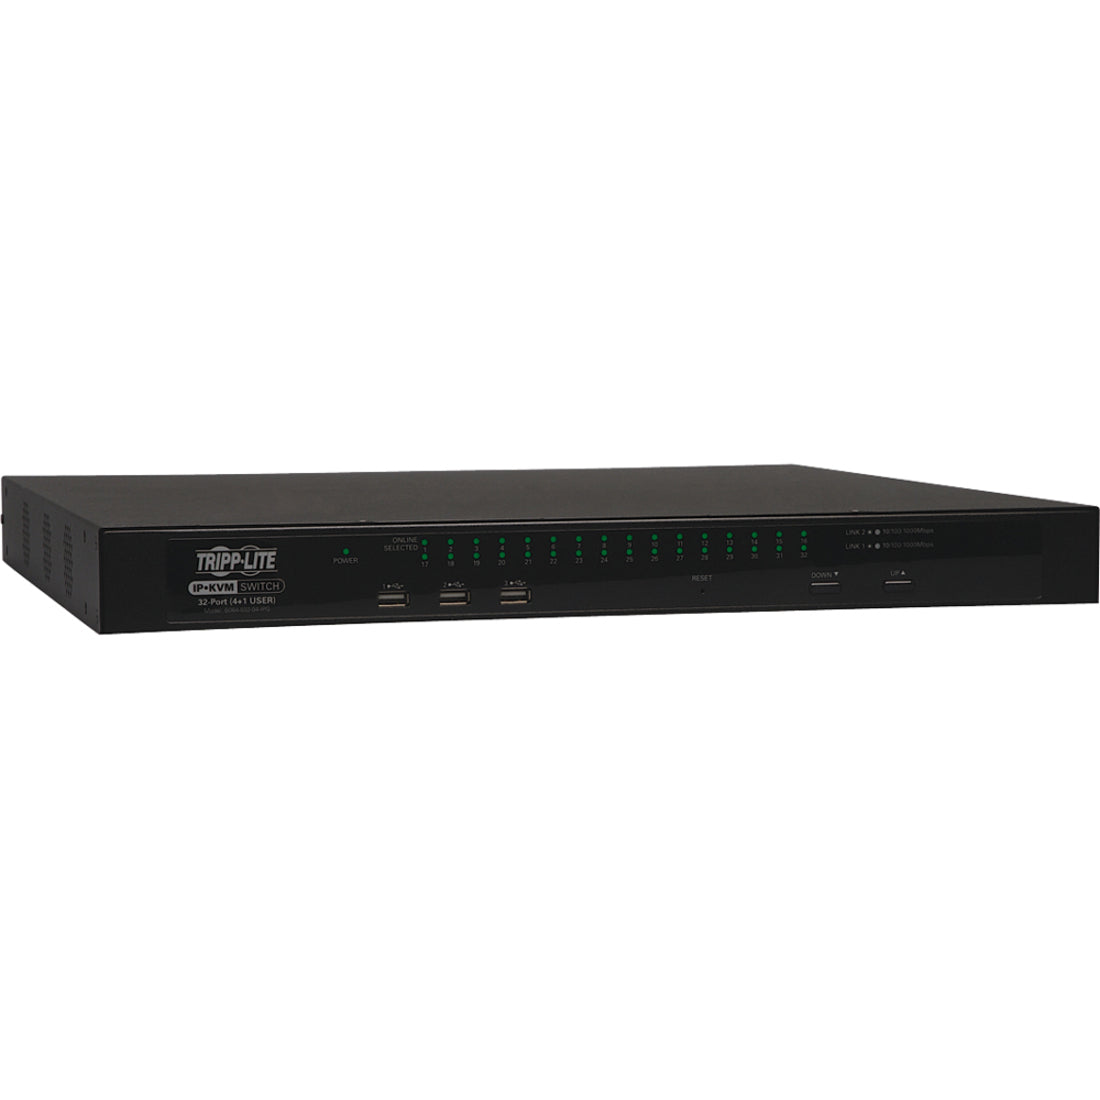 Tripp Lite B064-032-02-IPG NetDirector KVM Switchbox, 32 Port, 3 Year Warranty, TAA Compliant